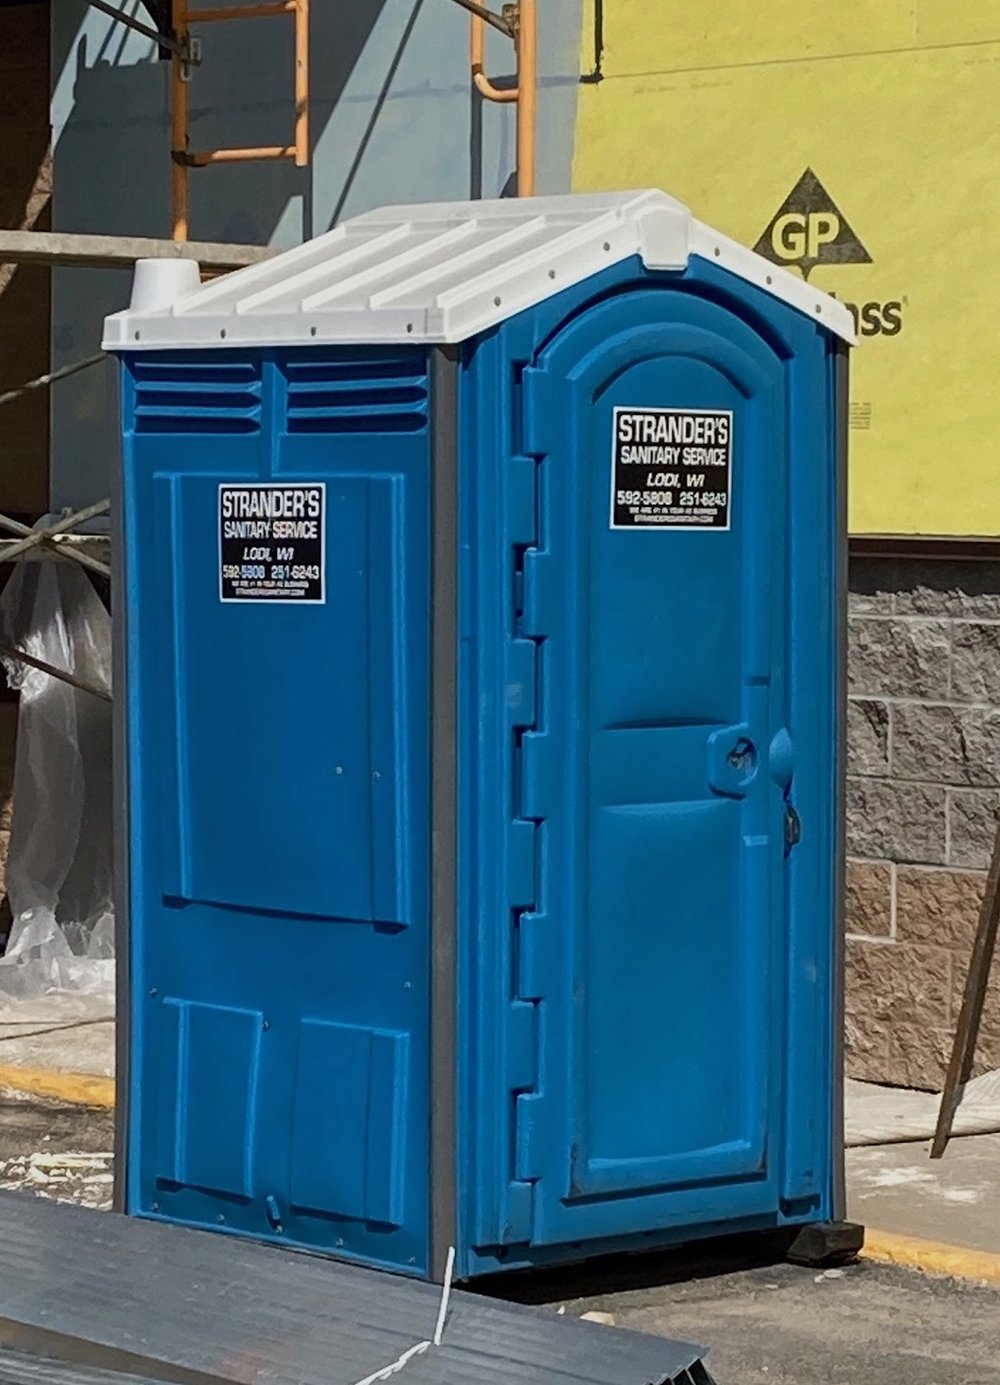 Modern outhouse